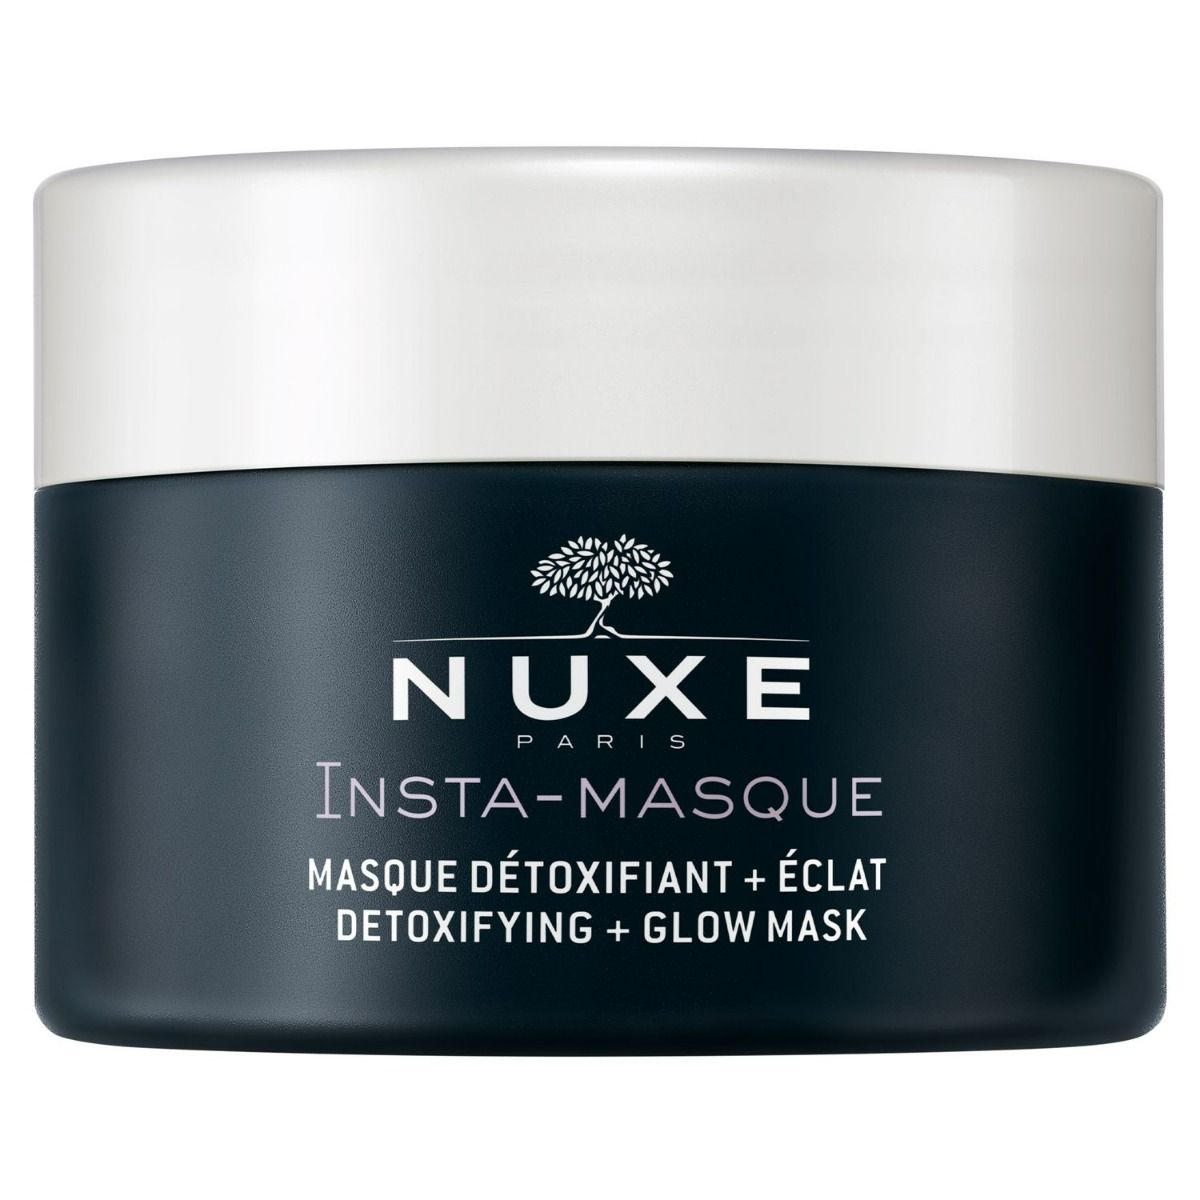 Nuxe Insta-Masque Détoxifiant + Eclat медицинская маска, 50 ml nuxe очищающая разглаживающая маска для лица masque purifiant lissant insta masque 50 мл nuxe insta masque